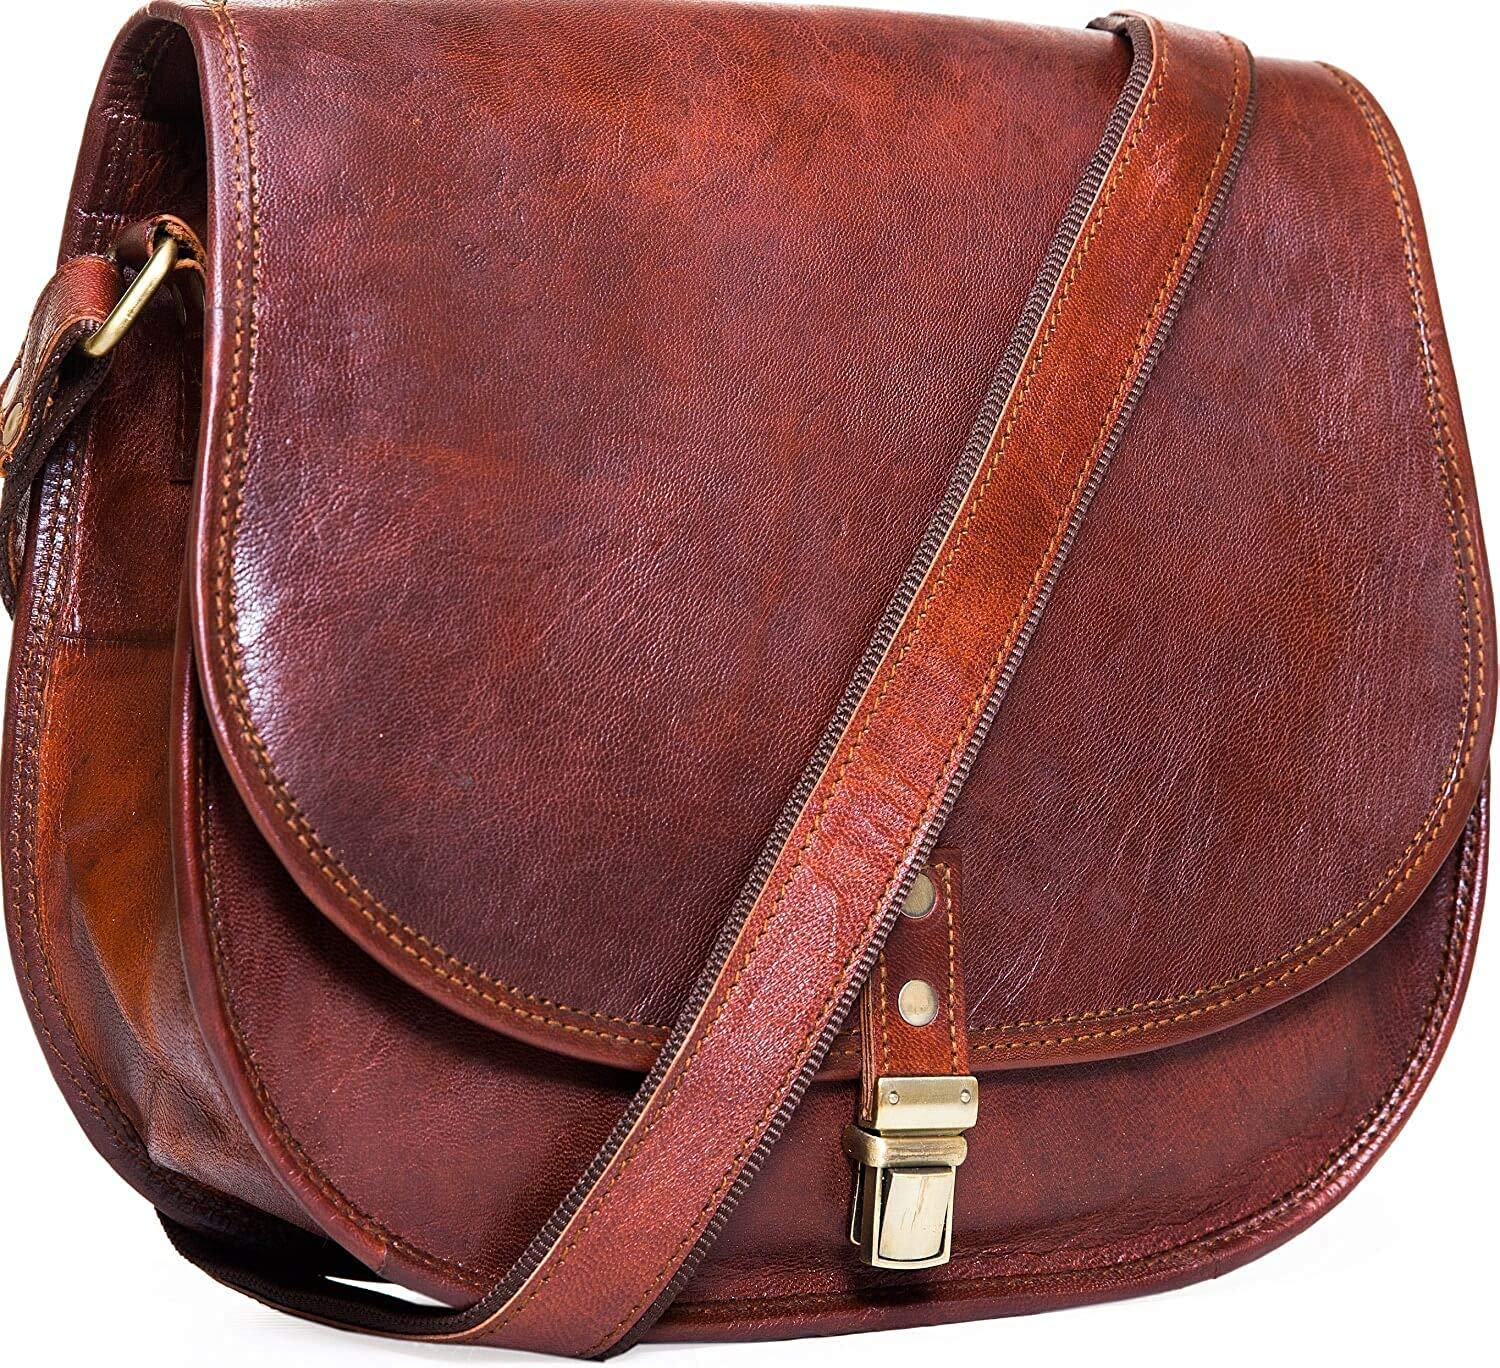 Ynport Women's Trendy Leather Saddle Bag Purse